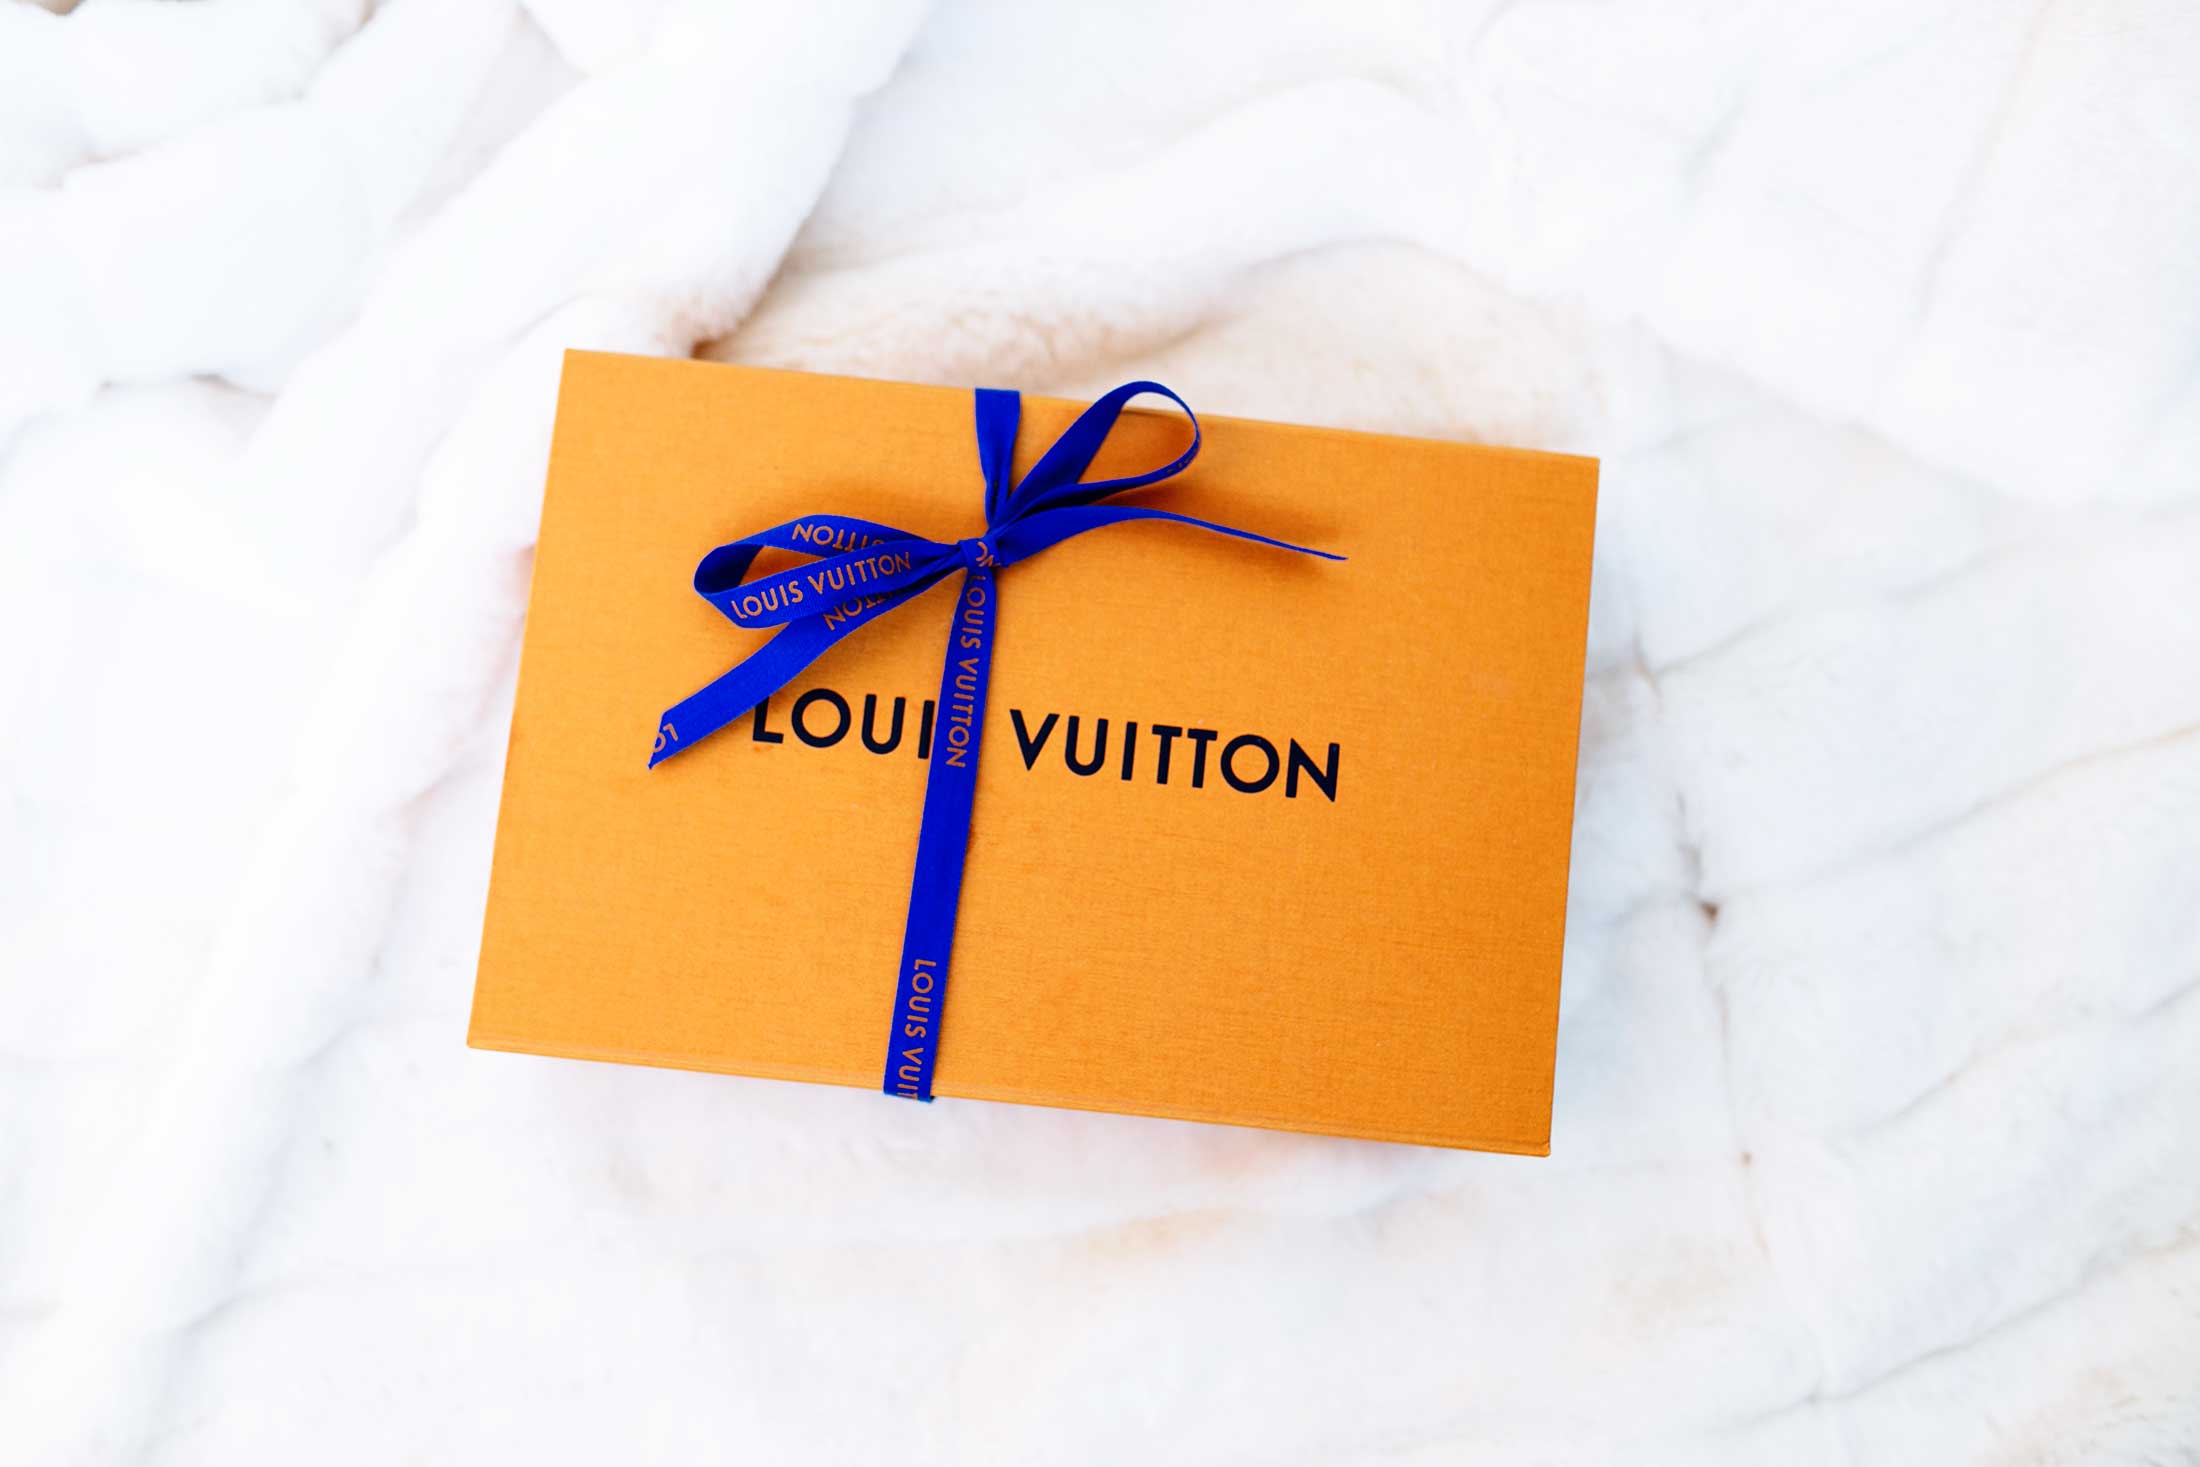 Inside that Louis Vuitton box…